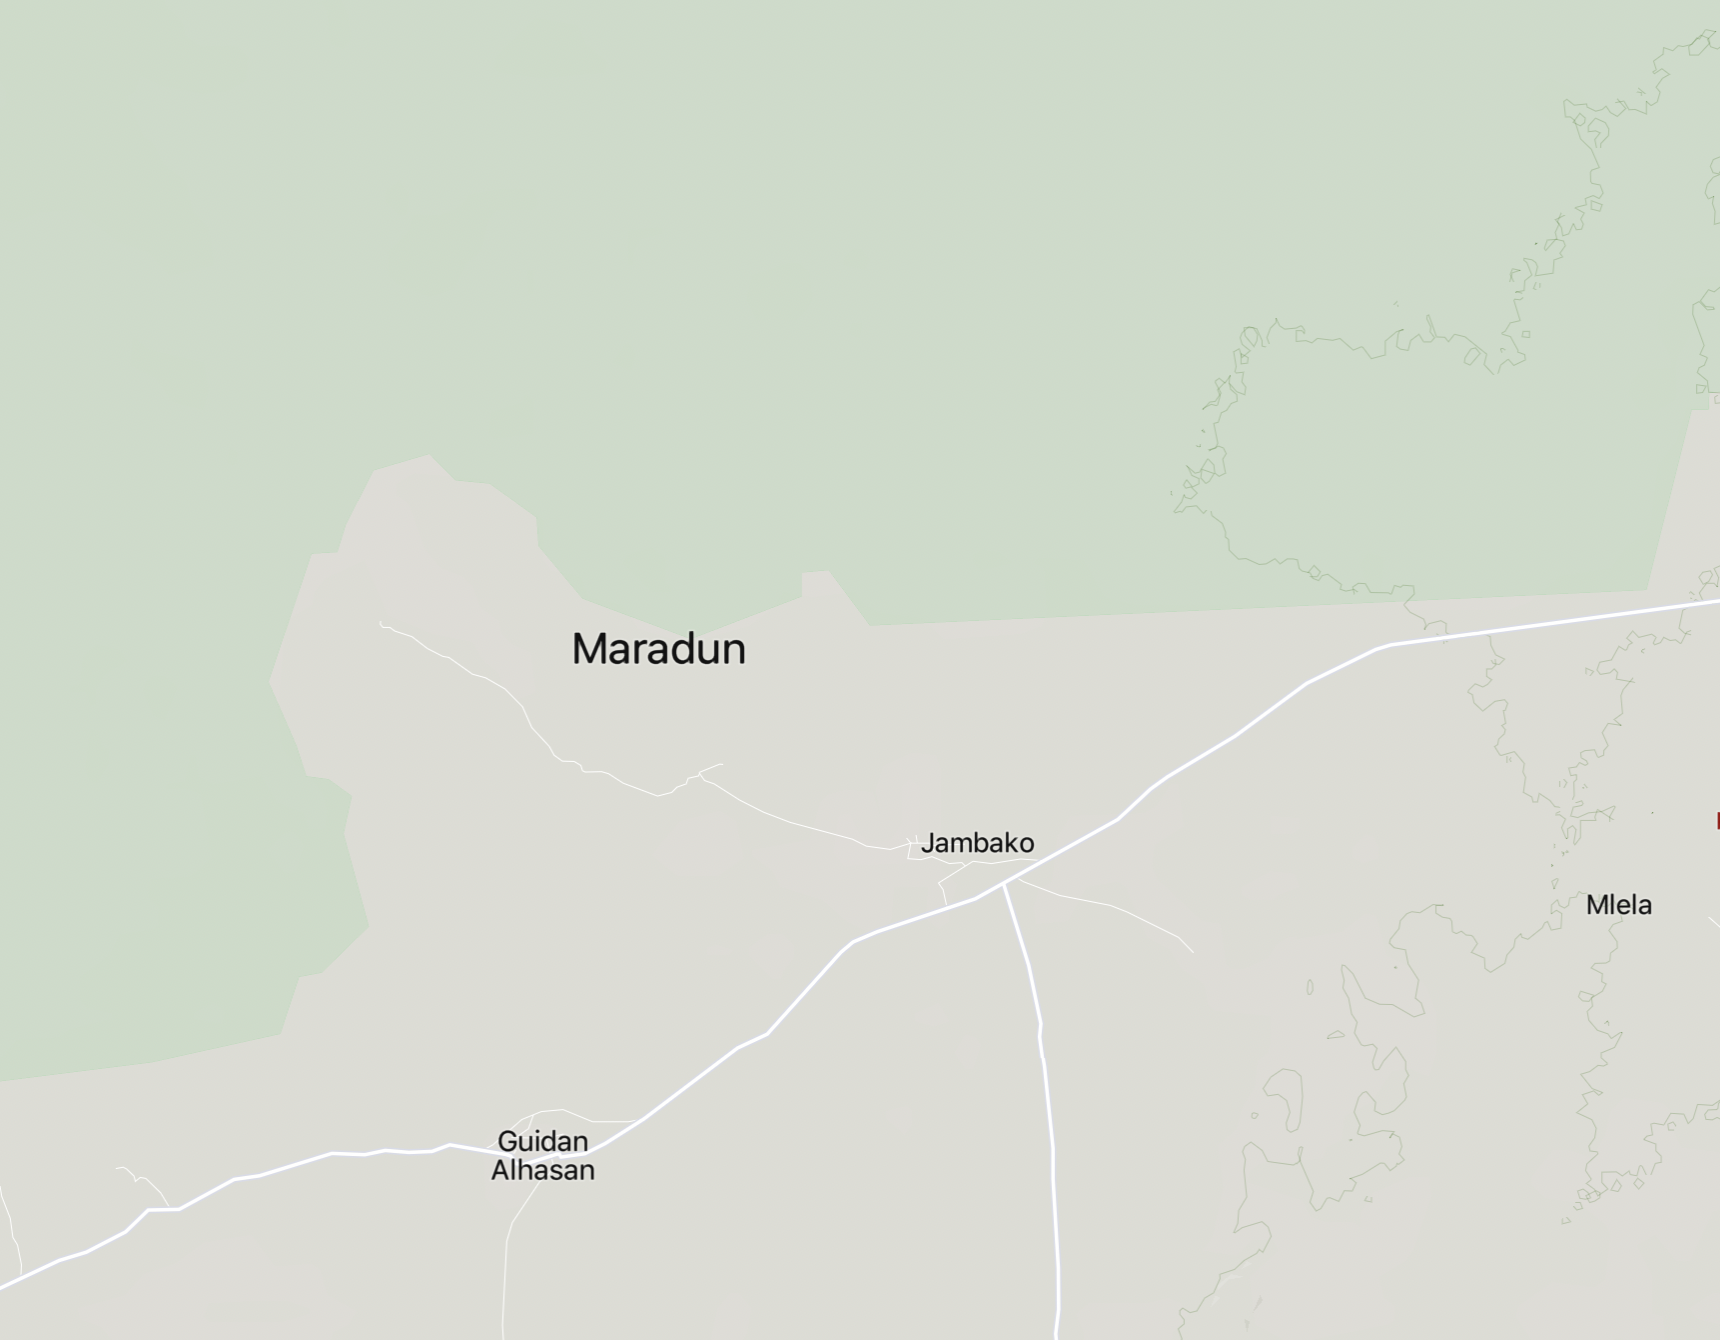 Maradun LGA, Zamfara State, Nigeria